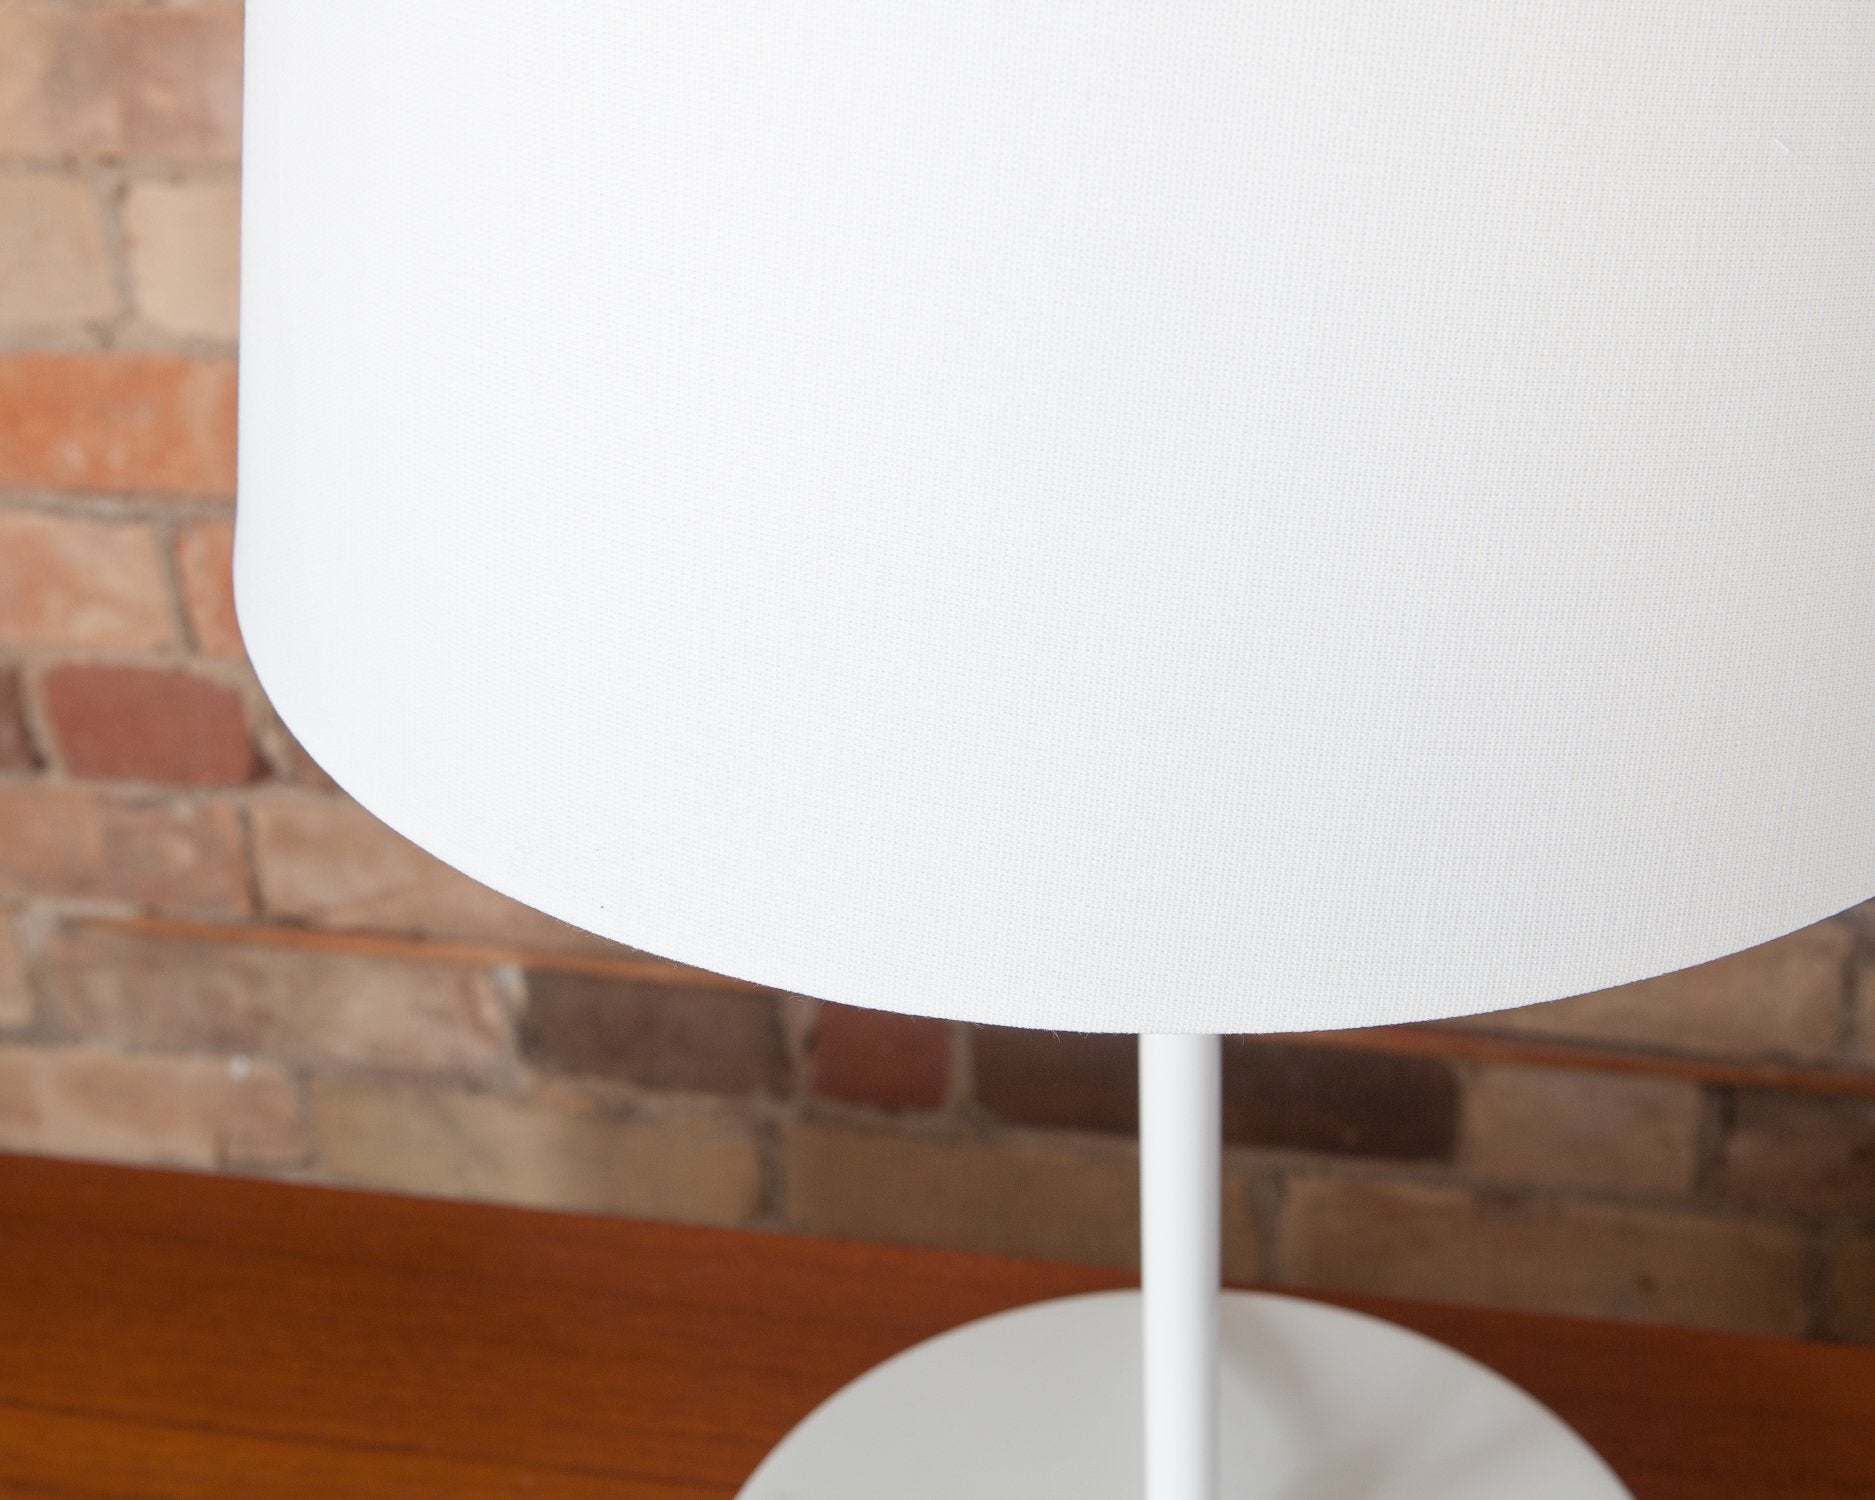 White Table Lamp from Light Studio by Horn